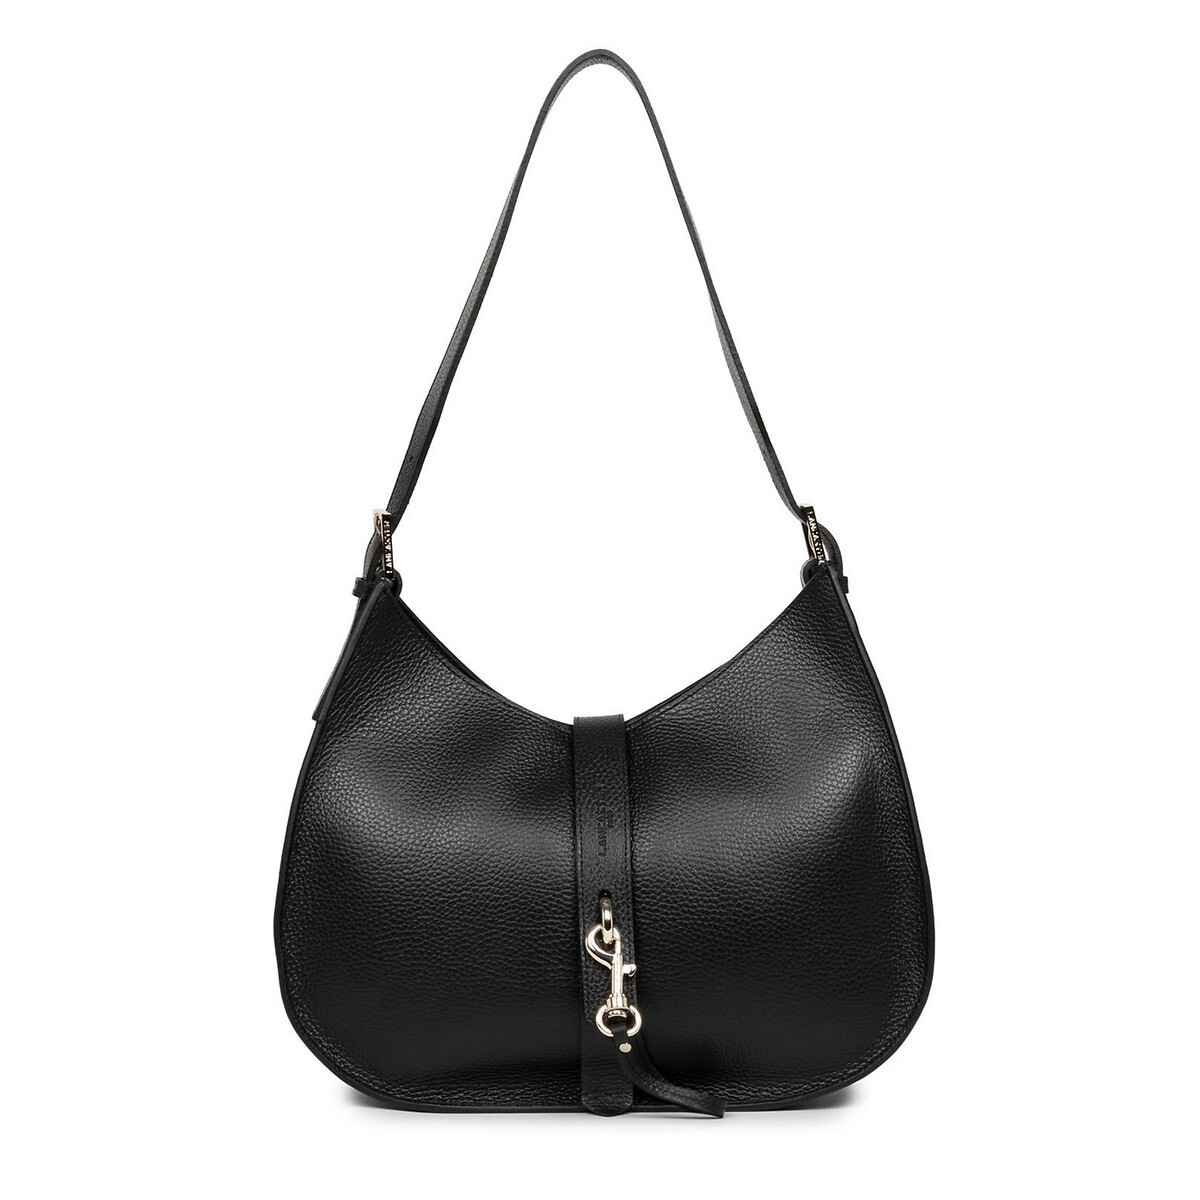 Сумка FOULONN DOUBLE единый размер черный сумка багет кожаная женская синяя lmr 5810 3j